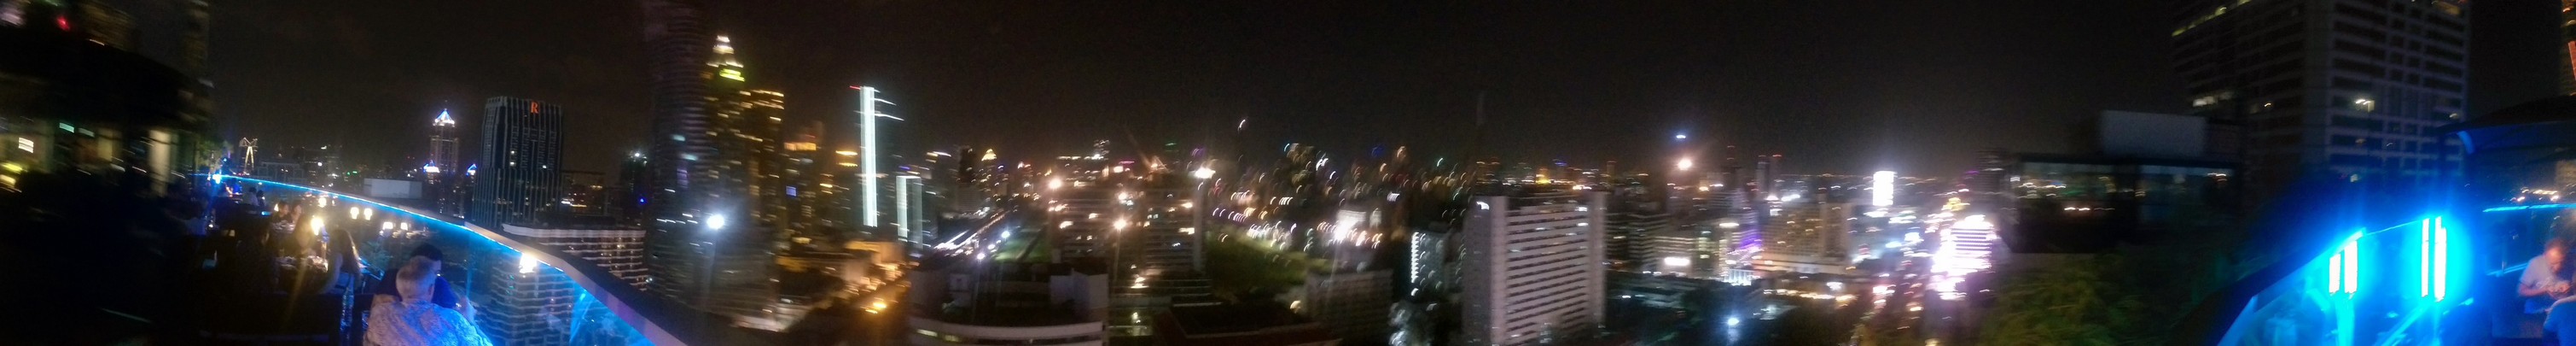 Bangkok rooftop